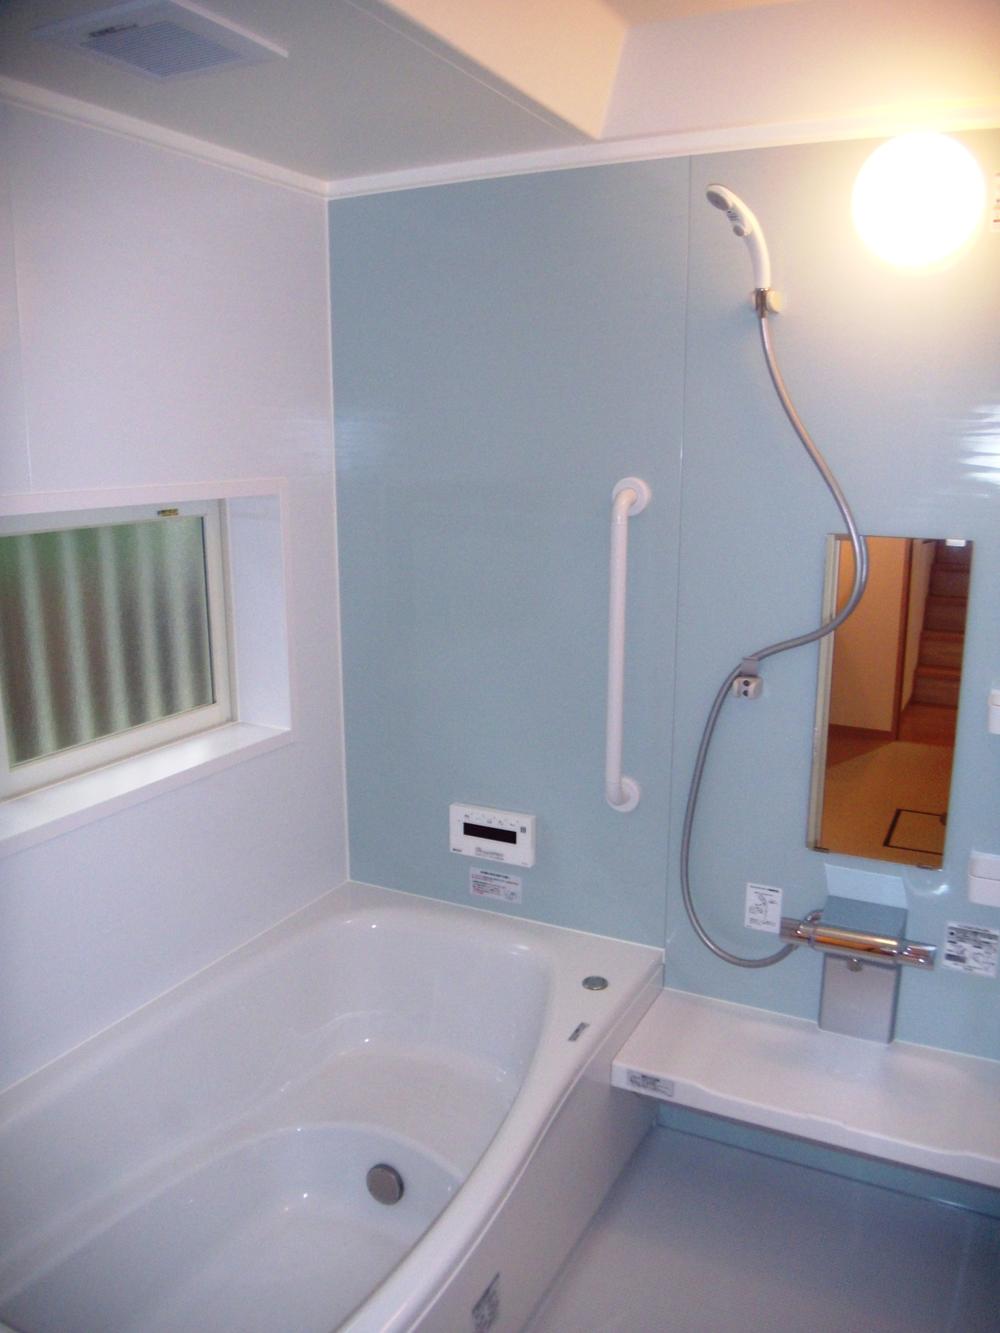 Same specifications photo (bathroom). Bathroom